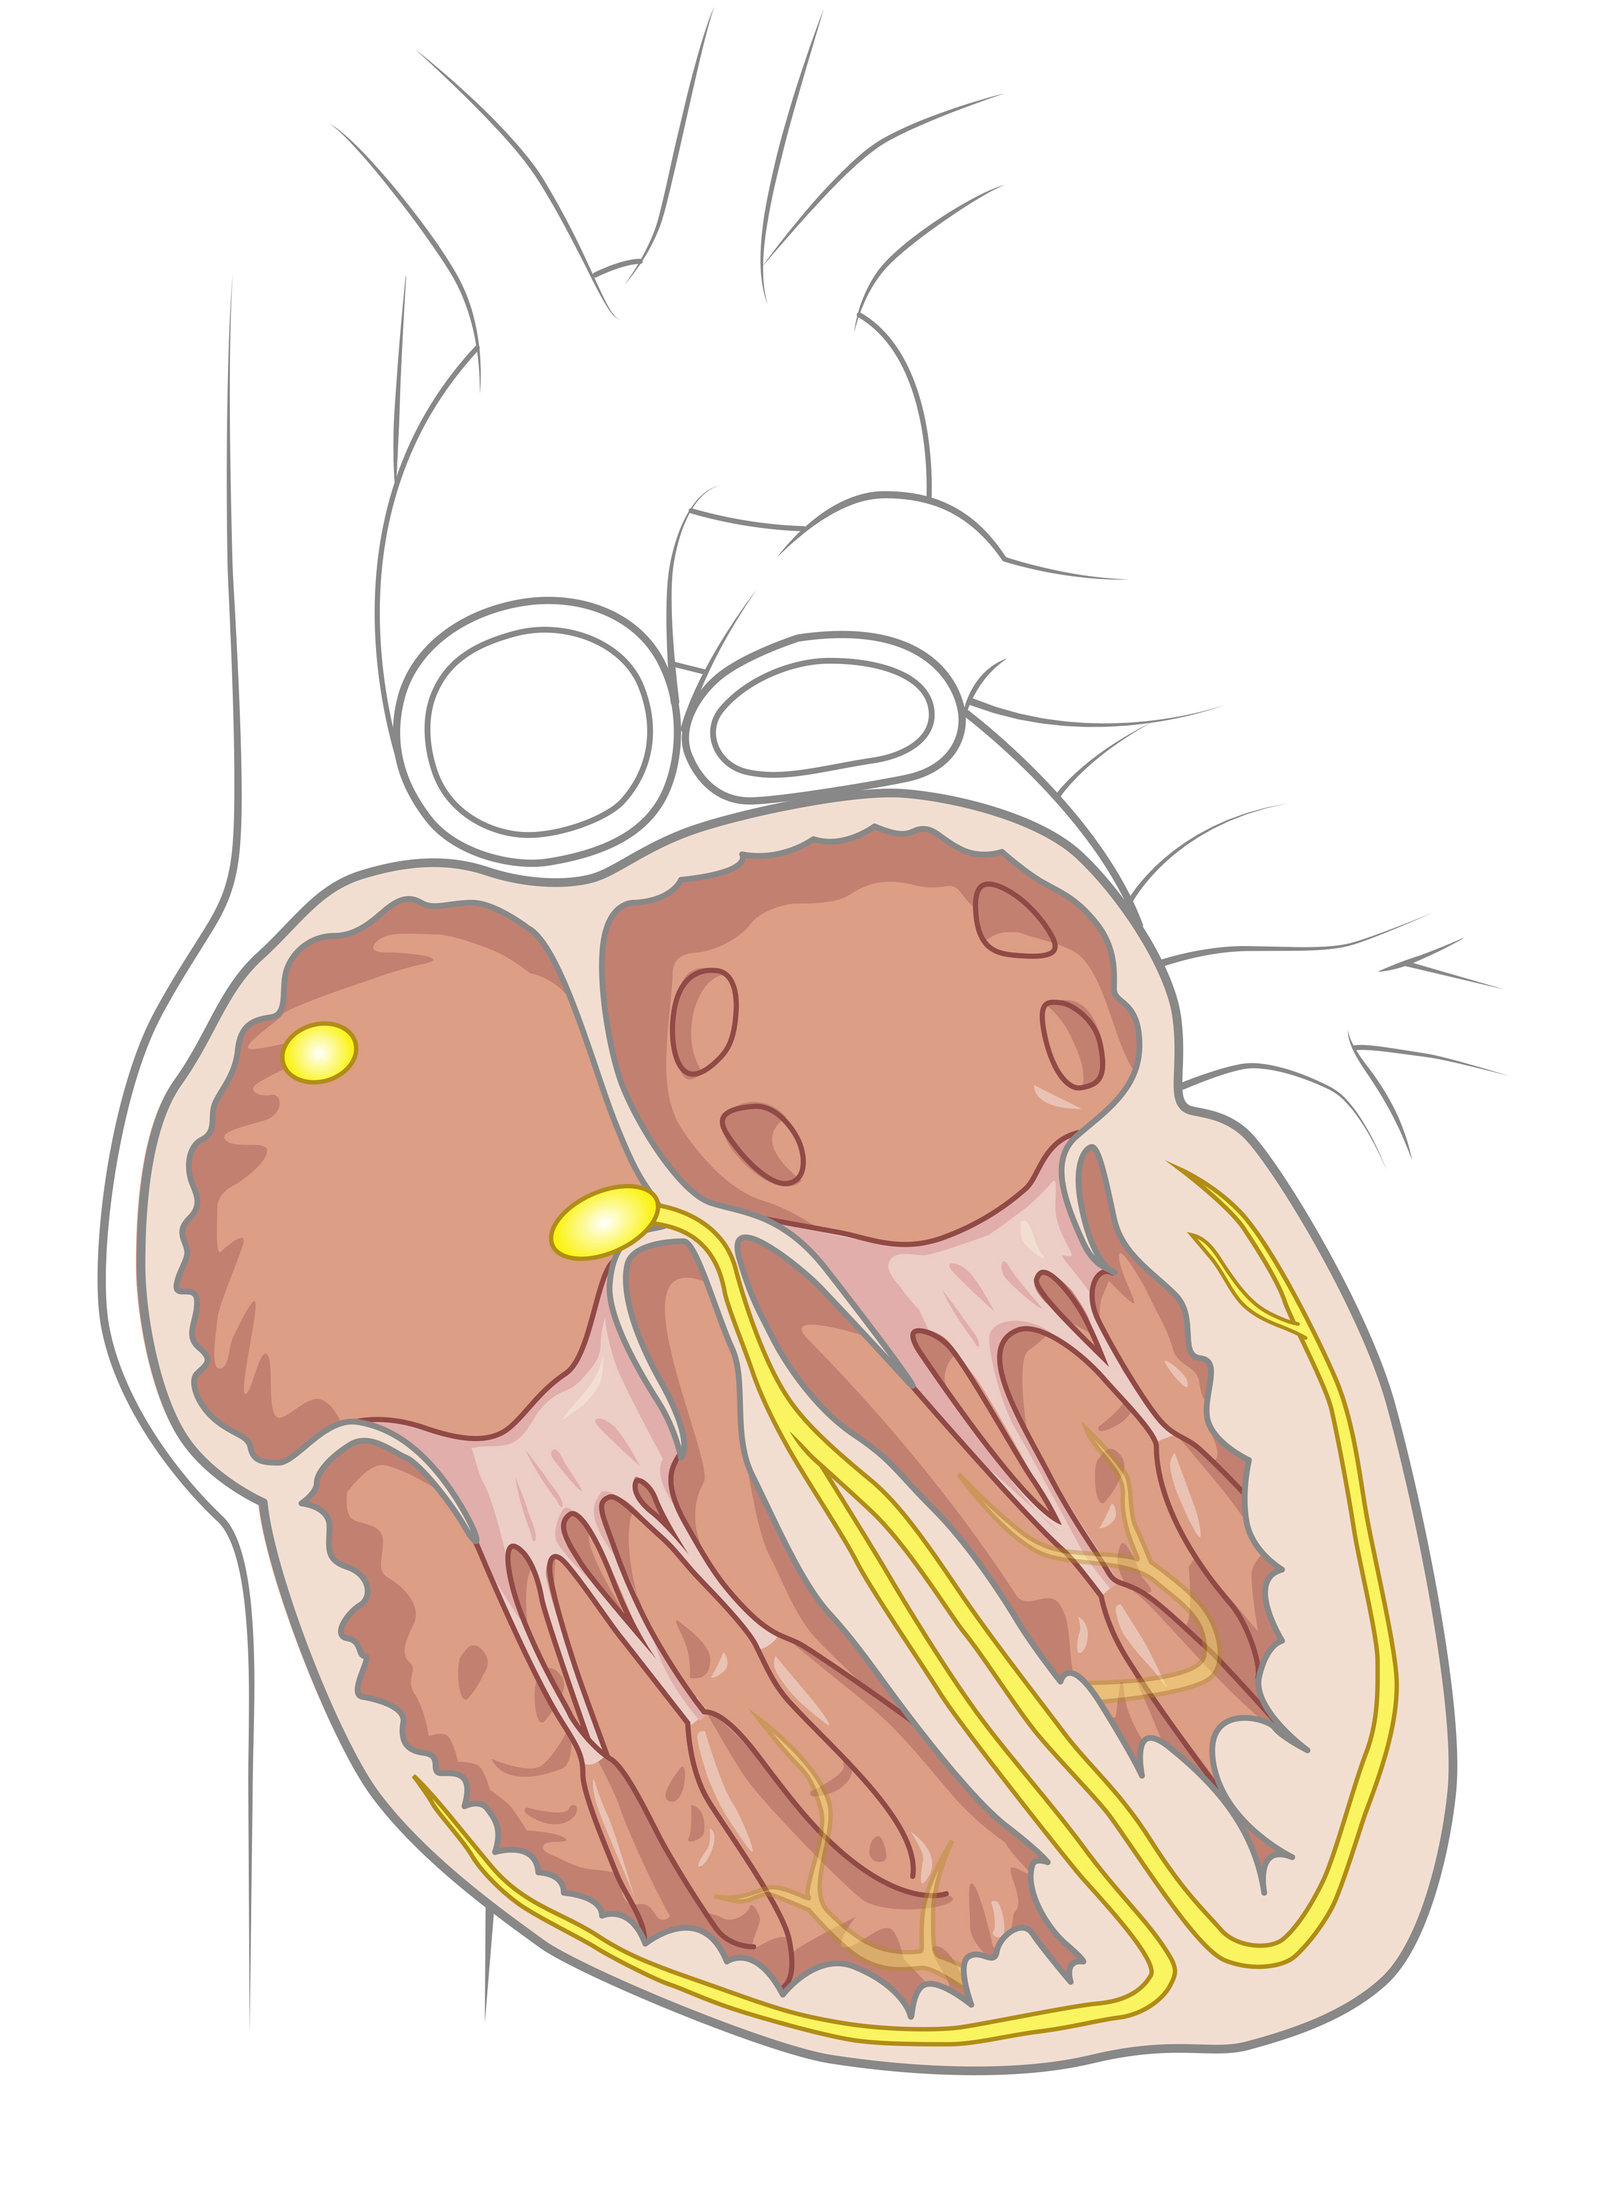 oculus-illustration-spital-herz-kardiologie-reizleitungssystem